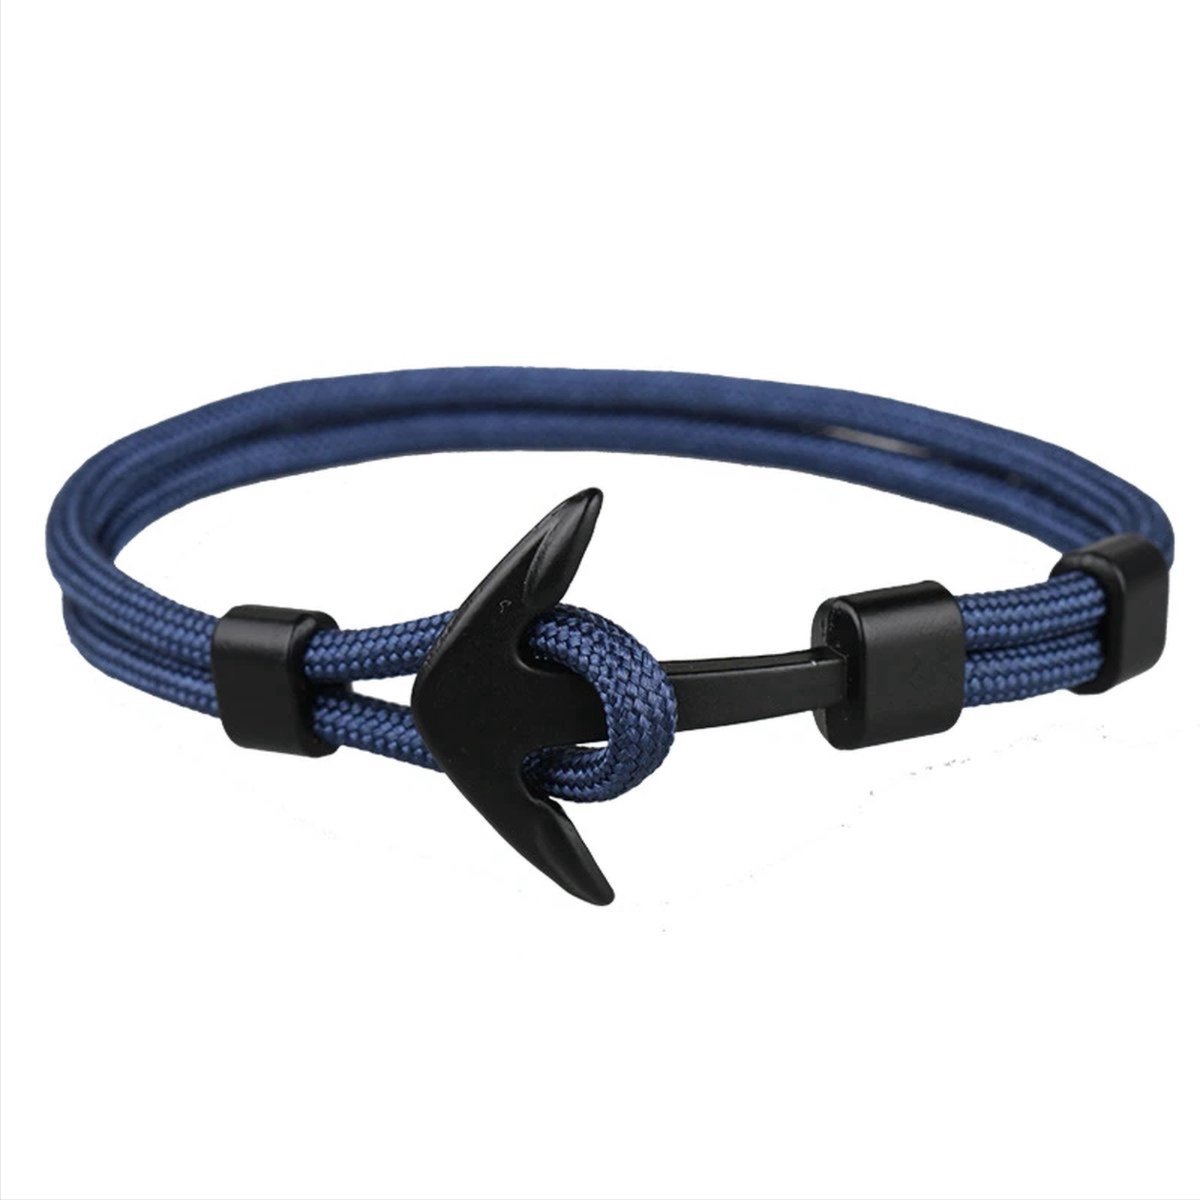 CHPN - Armband - Stoere Armband -voor Mannen - 21 cm - Stijlvolle armband - Zomer - Textiel - Heren - Accessoire - Cadeau - Anker - Zee